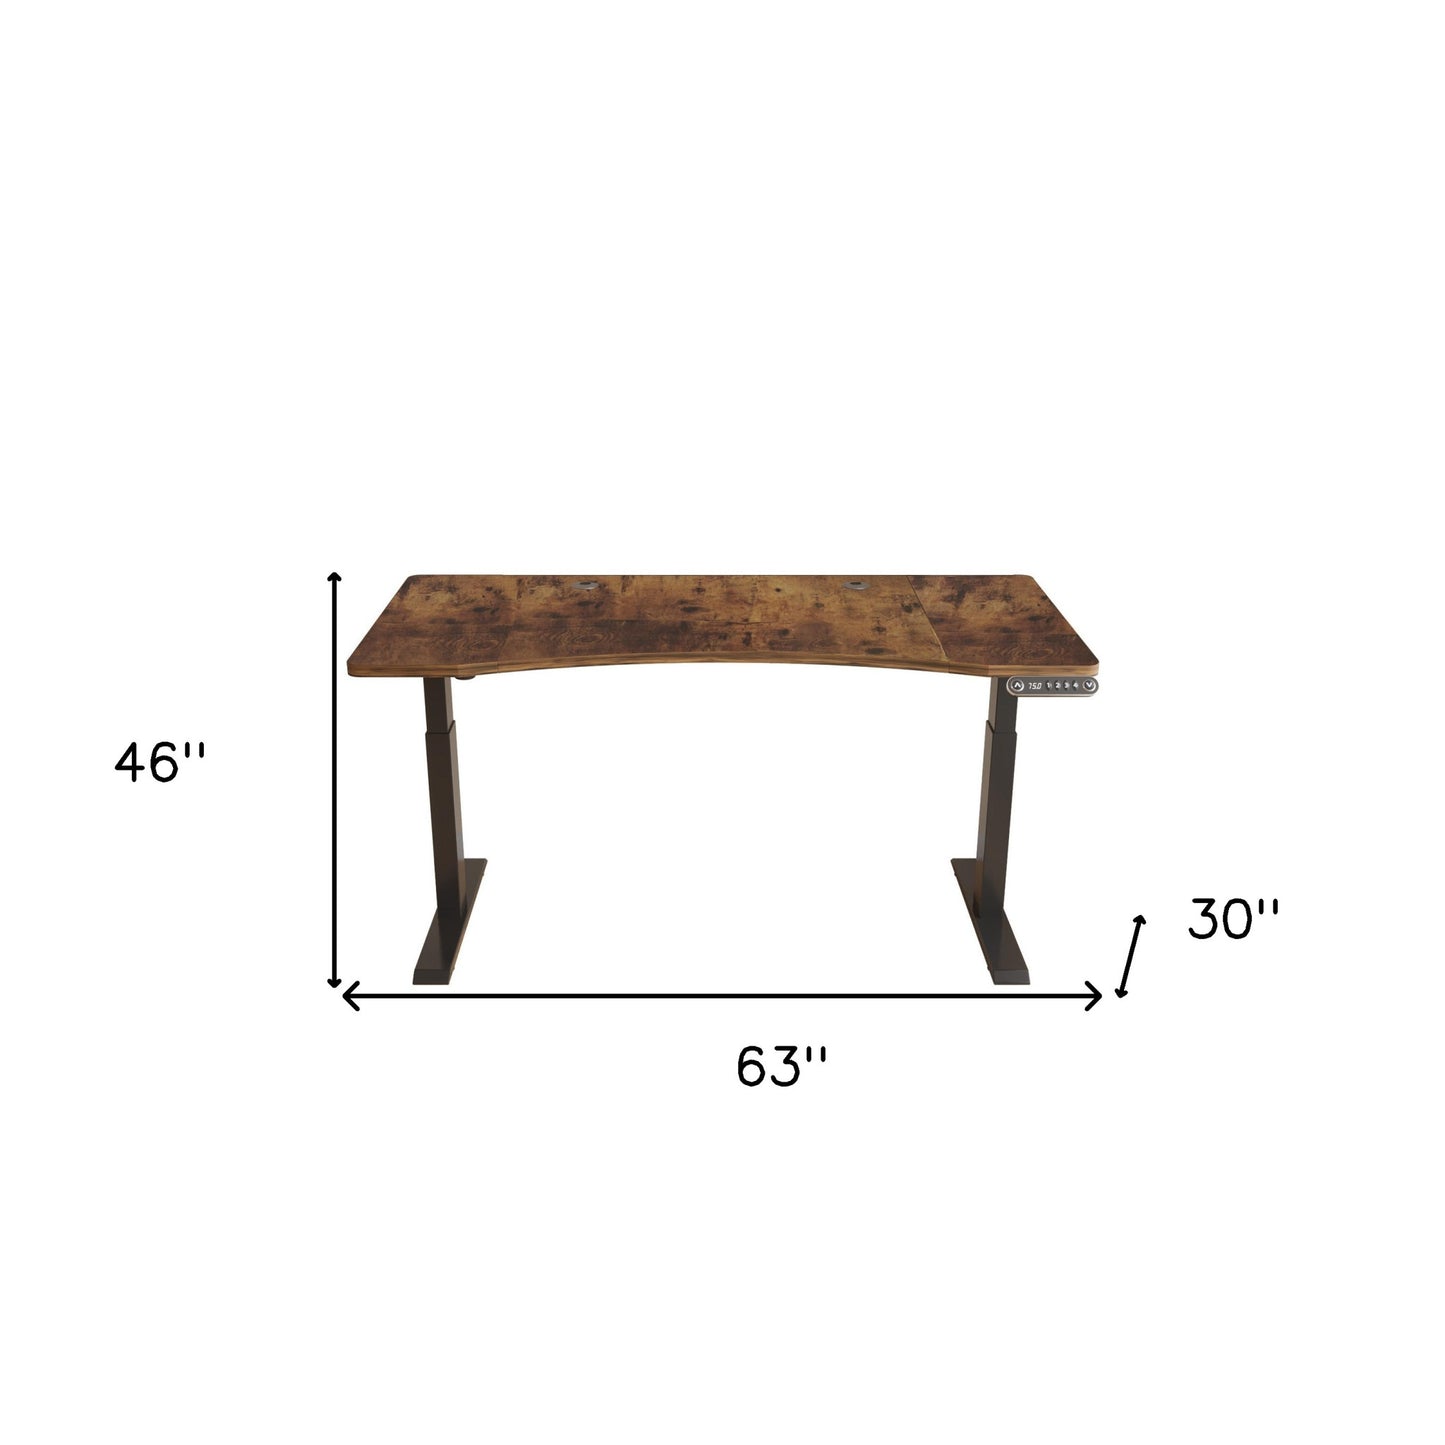 63" Adjustable Wood Brown and Black Standing Desk